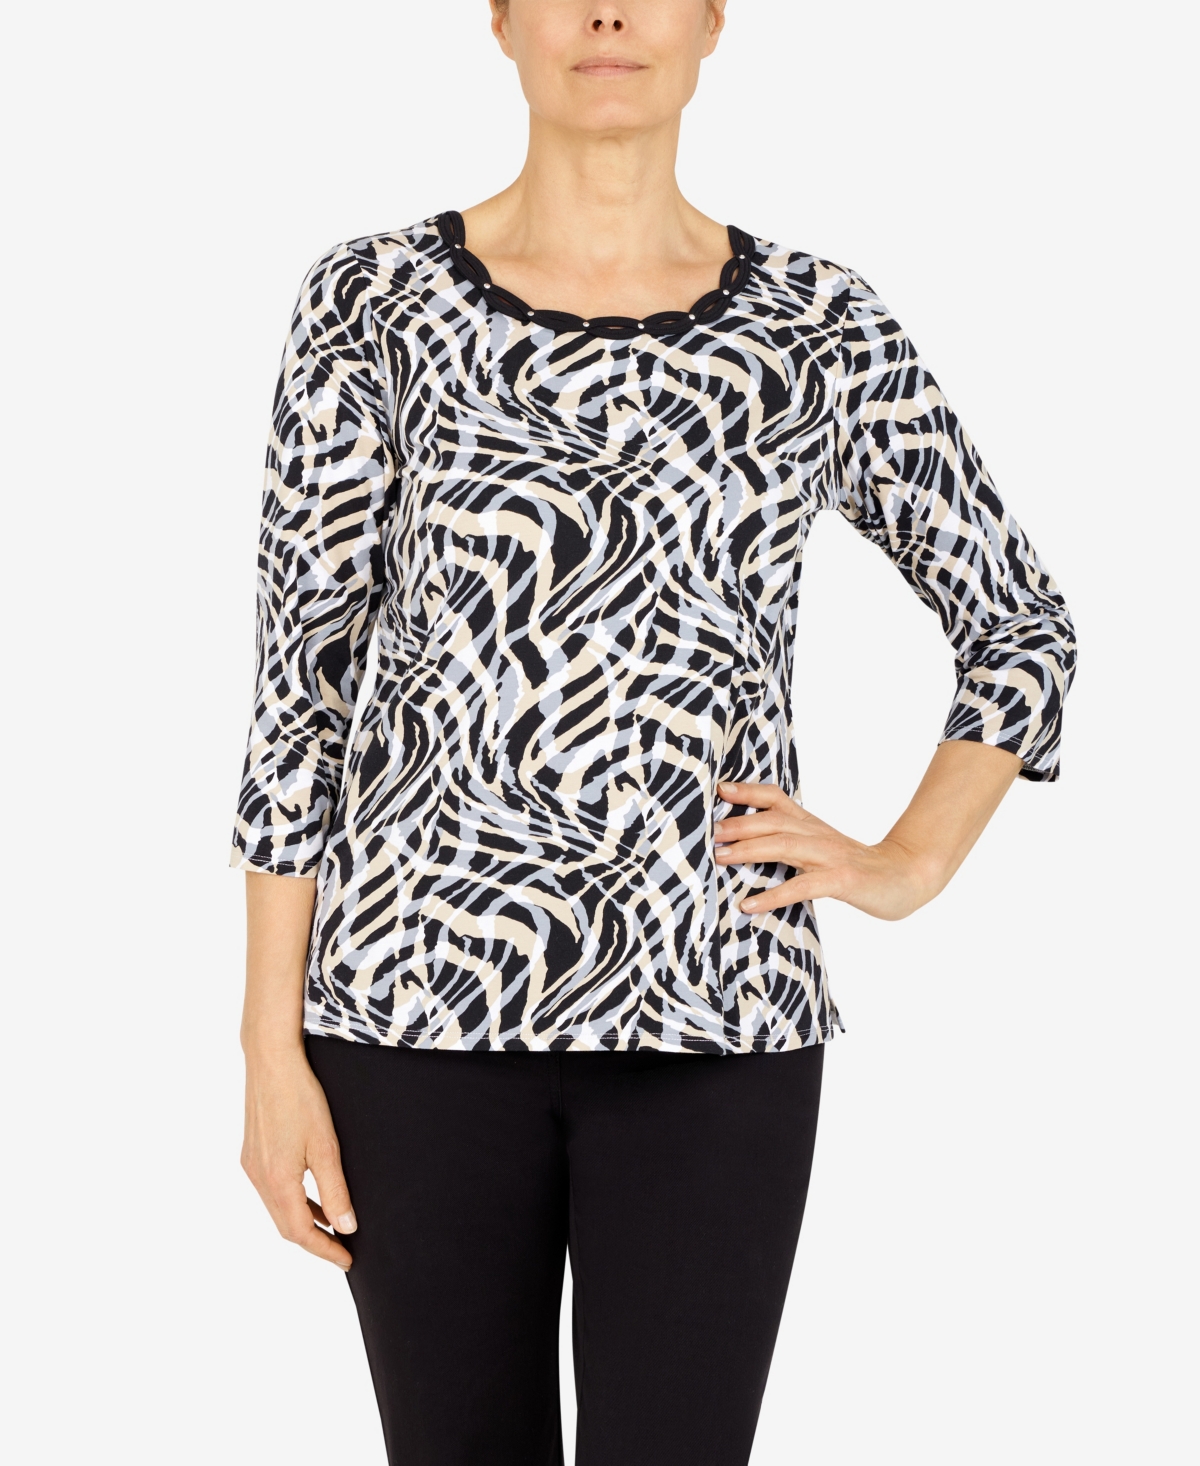 Women's three quarter length sleeves Swirled Stripe Top - Black,Tan